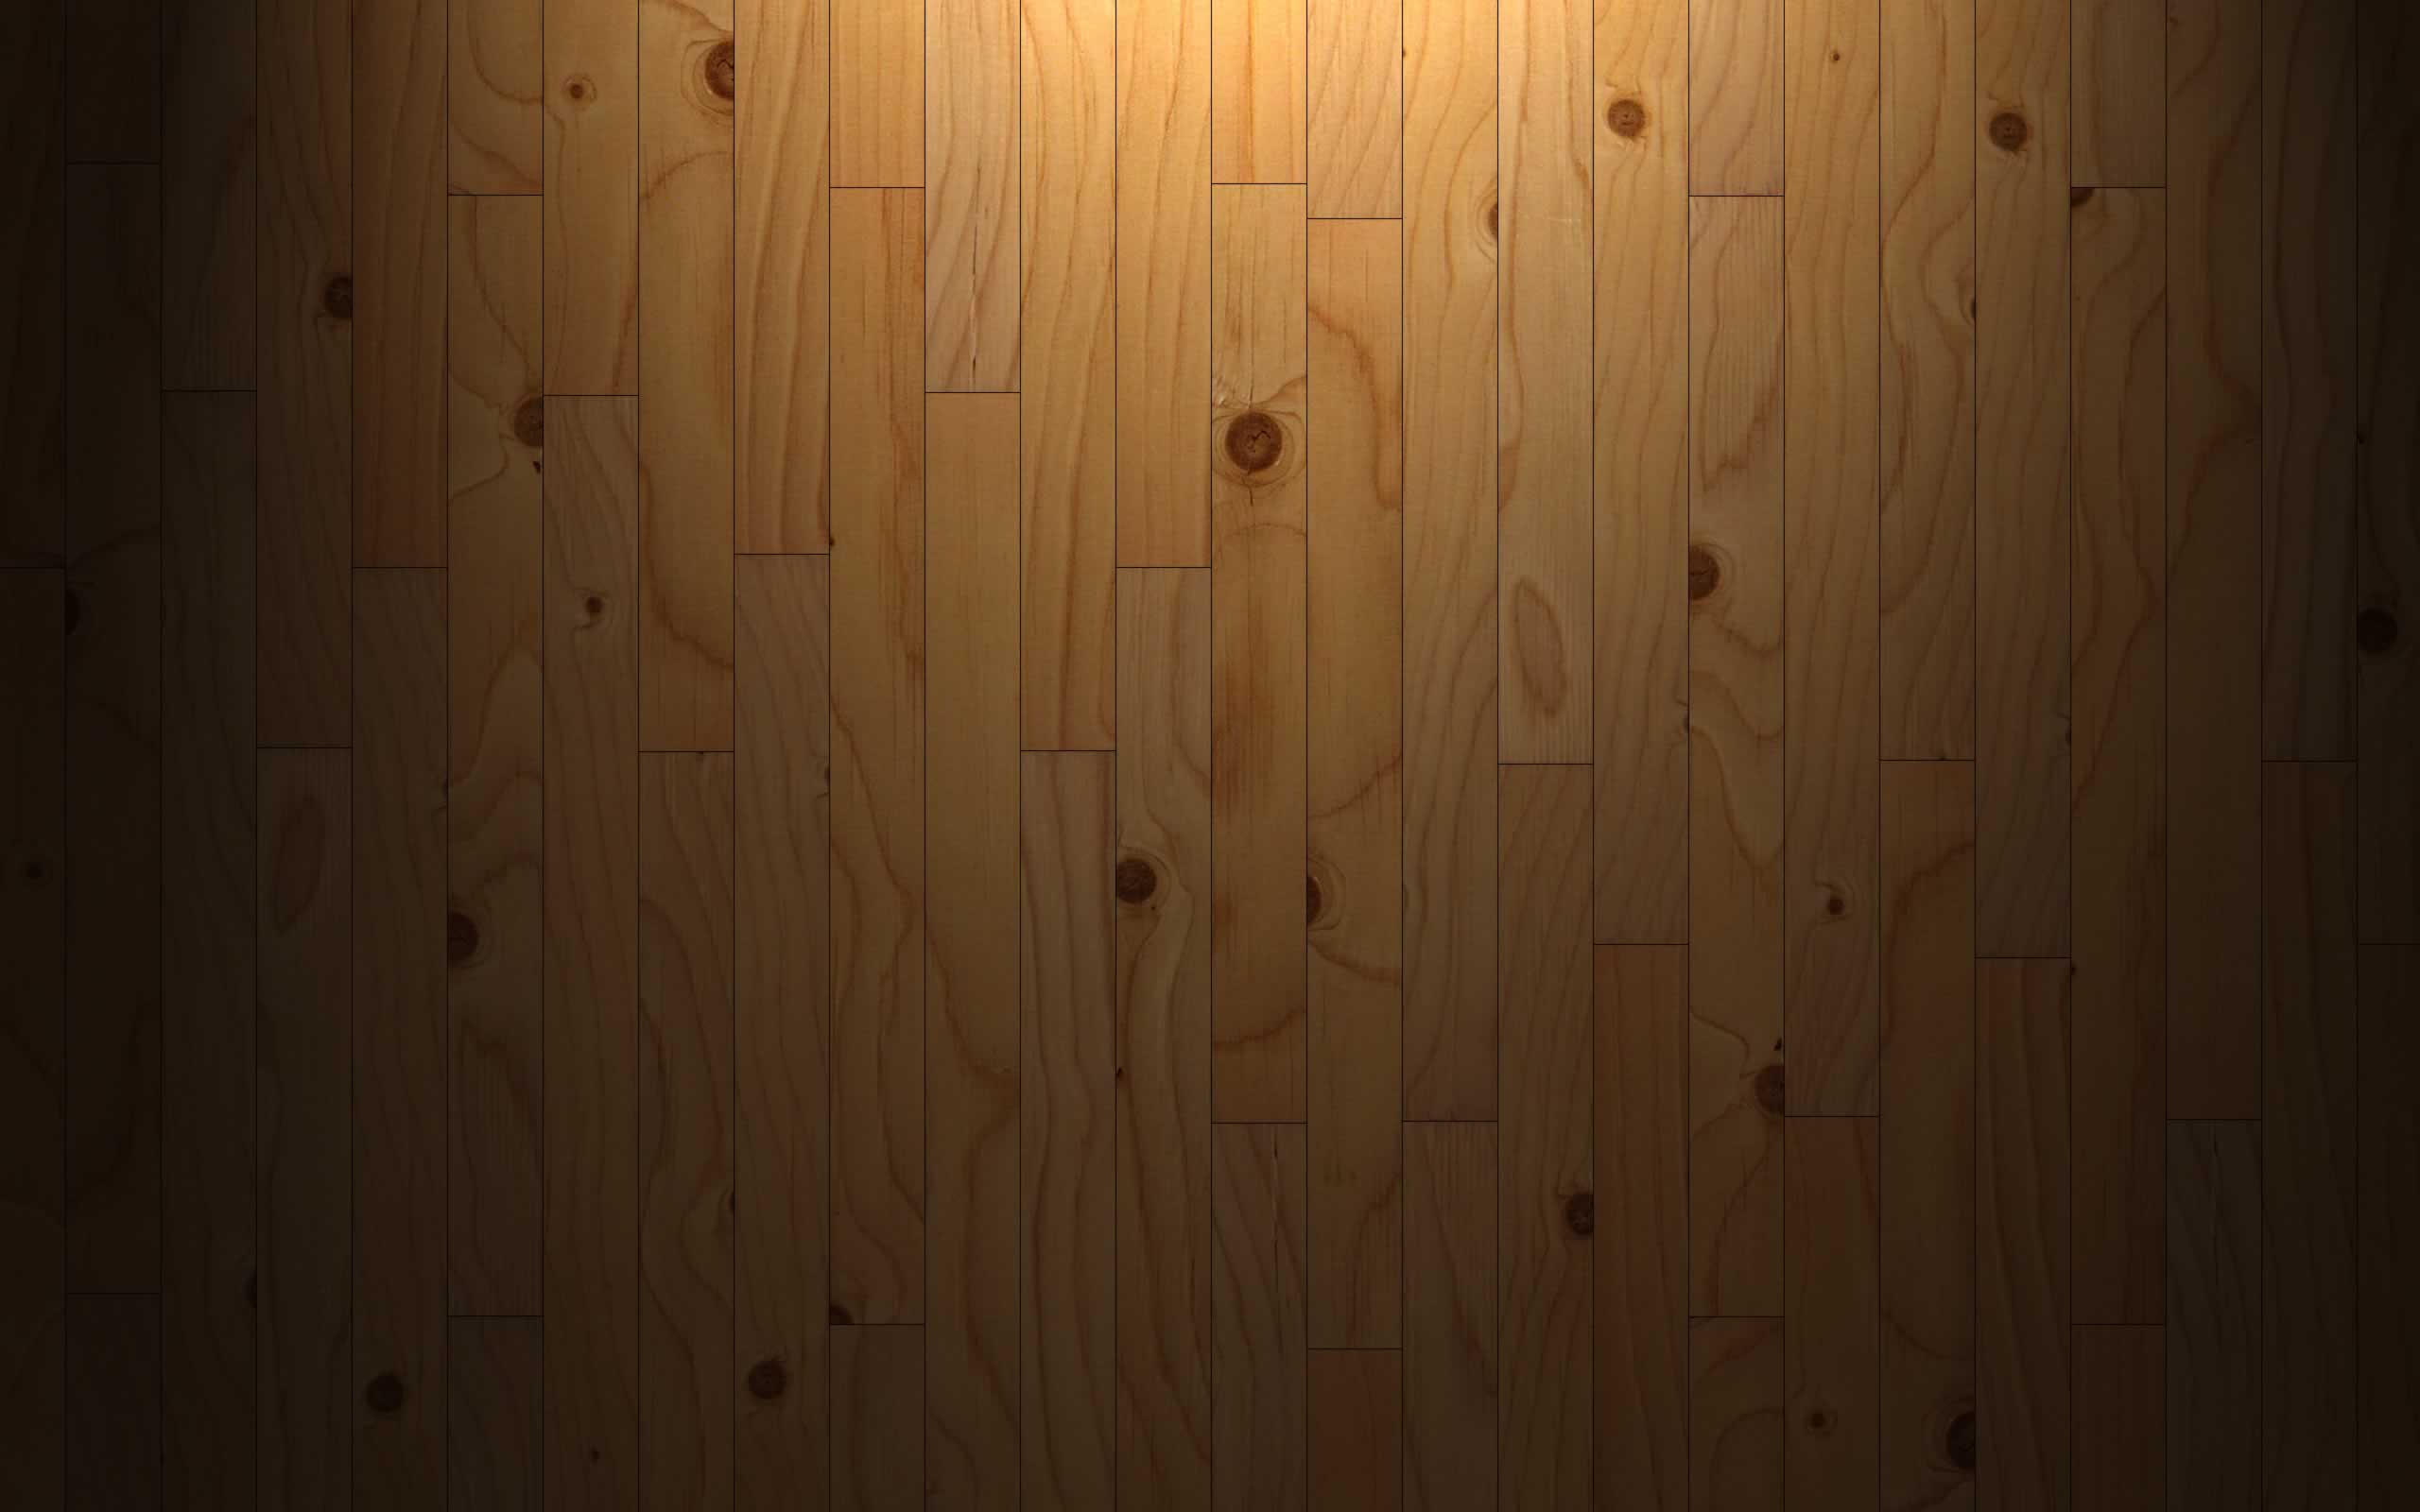 Plain Wood Background 19129 2560x1600 px